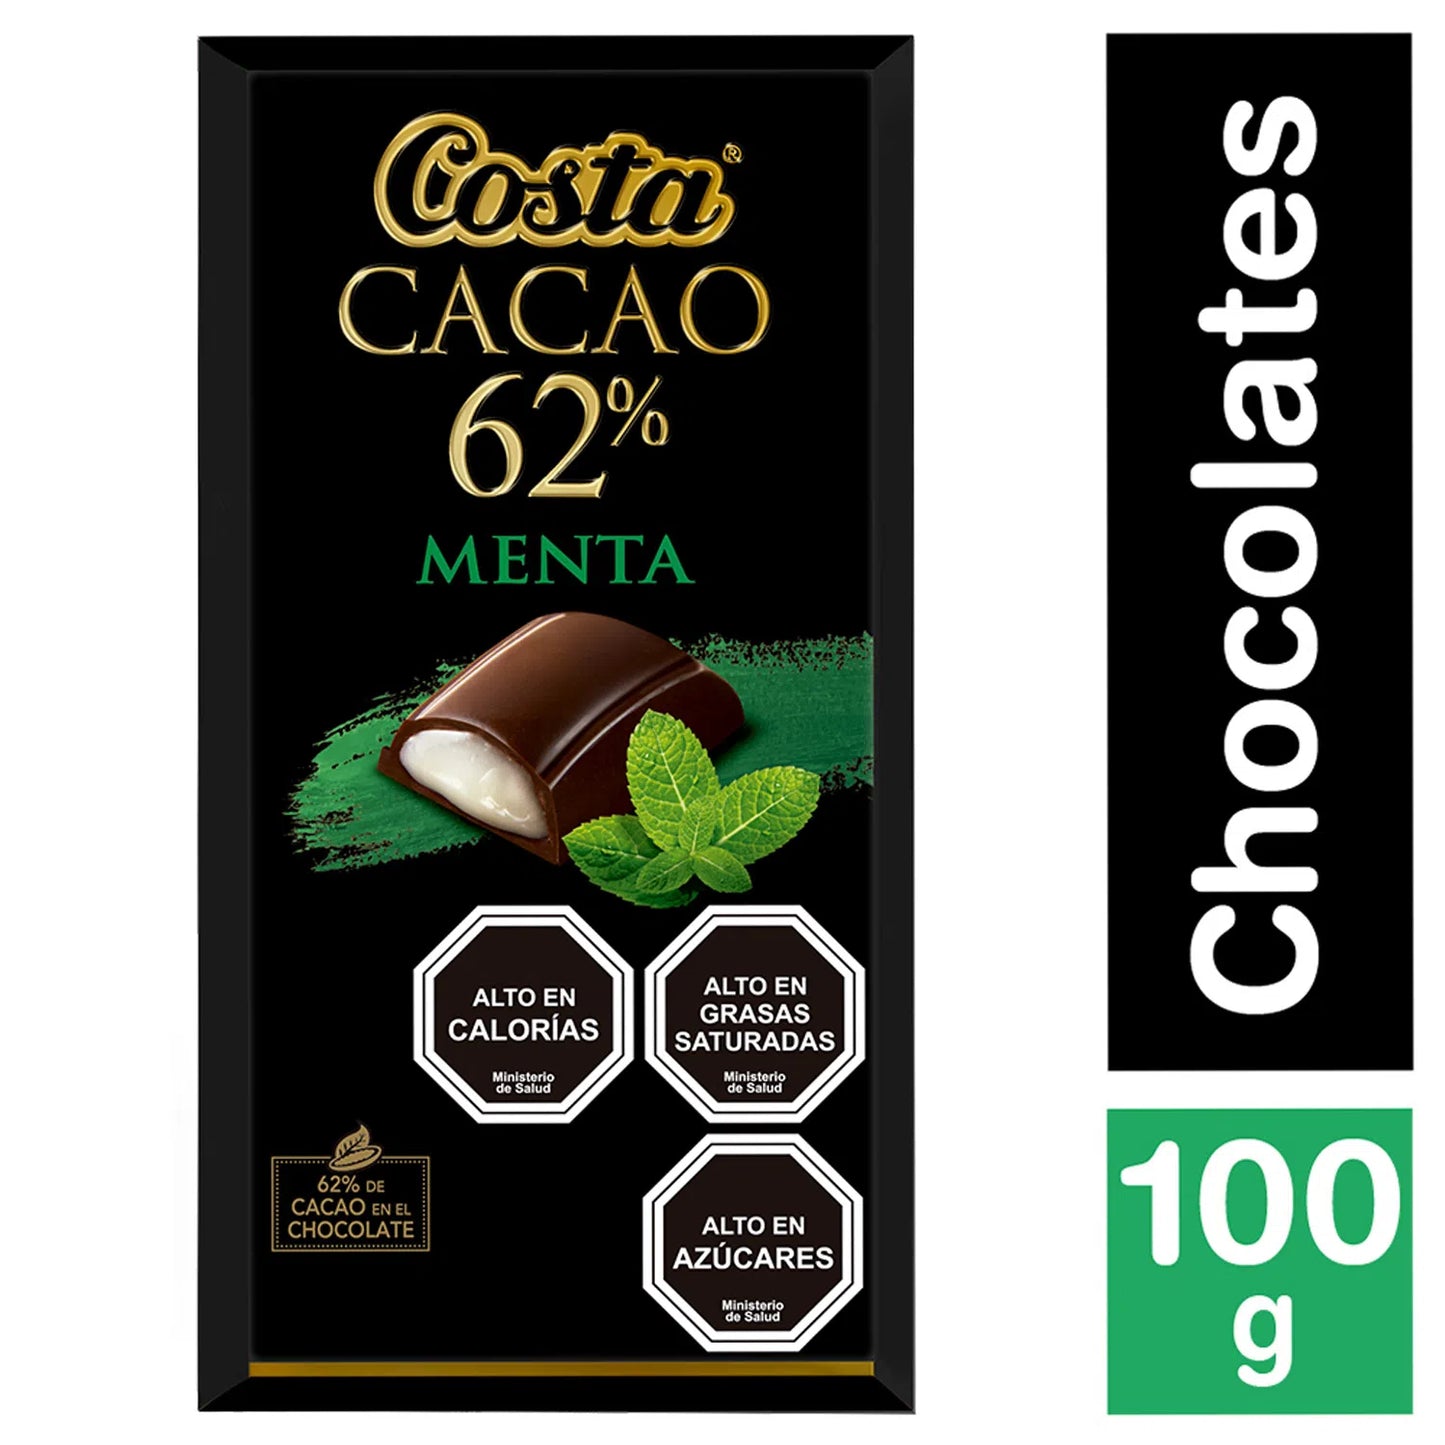 Chocolate costa cacao